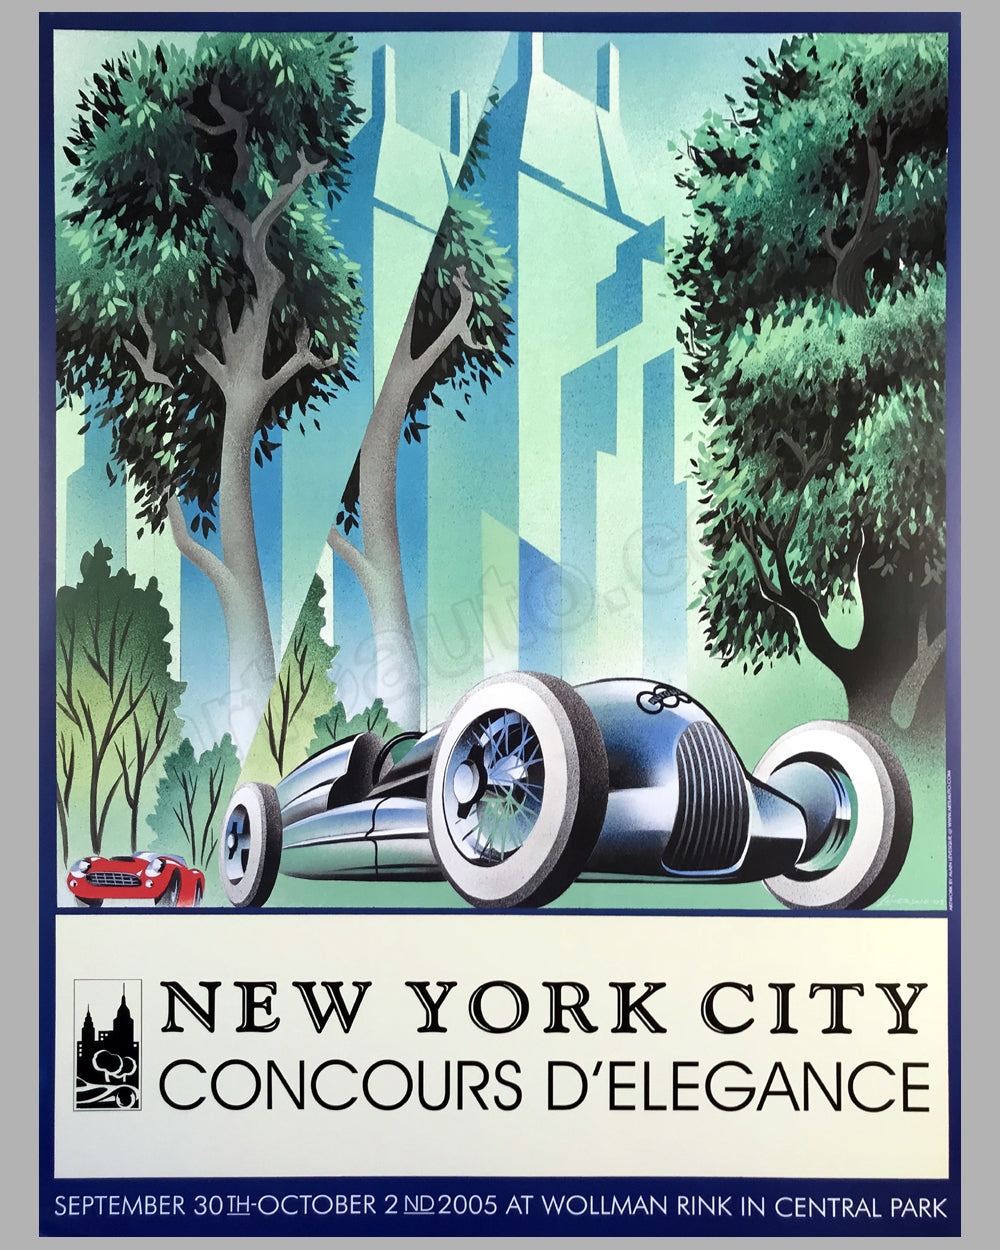 New York City Concours d' Elegance poster 2005 by Alain Lévesque